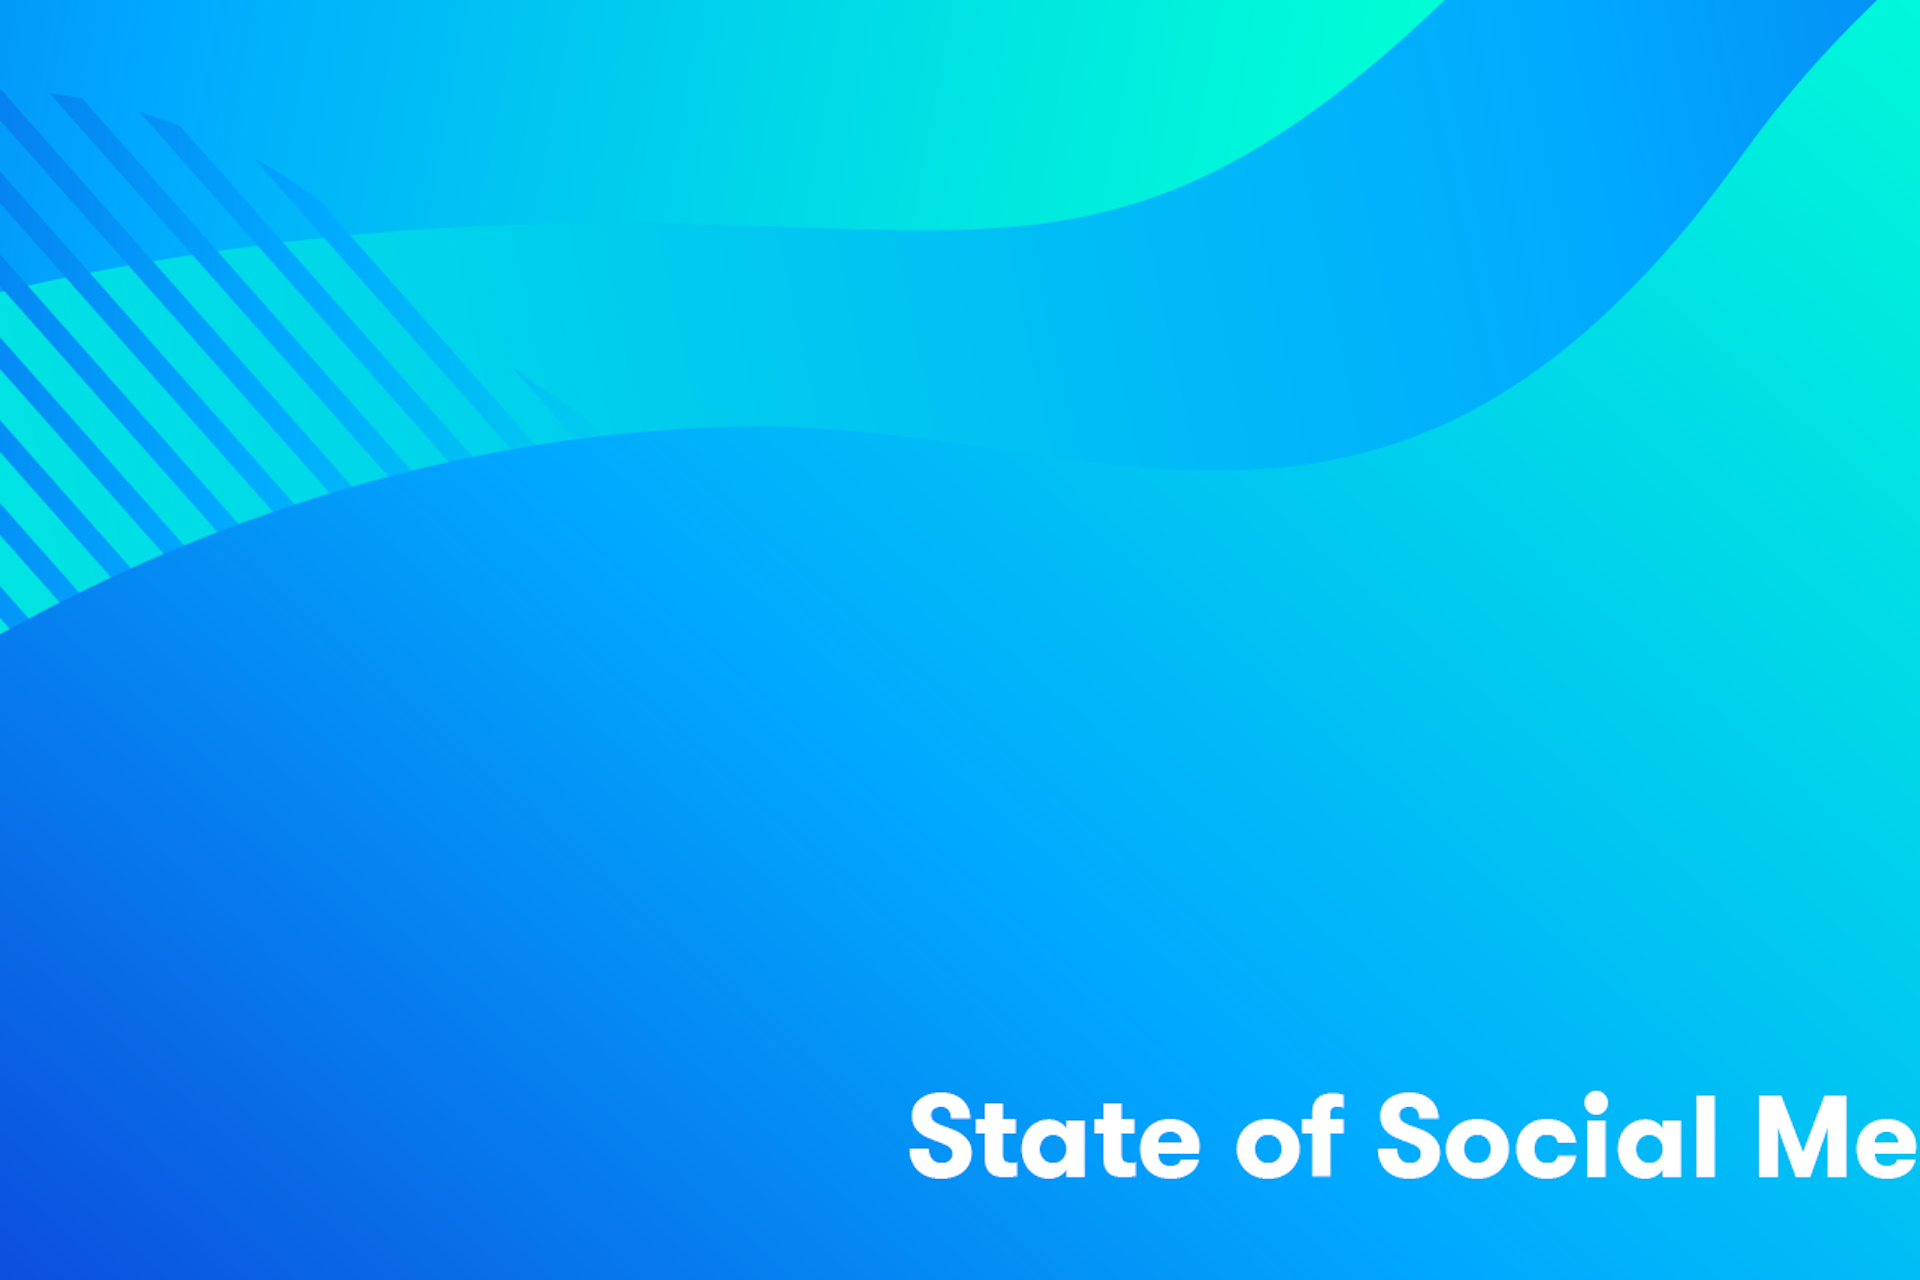 State of Social media report